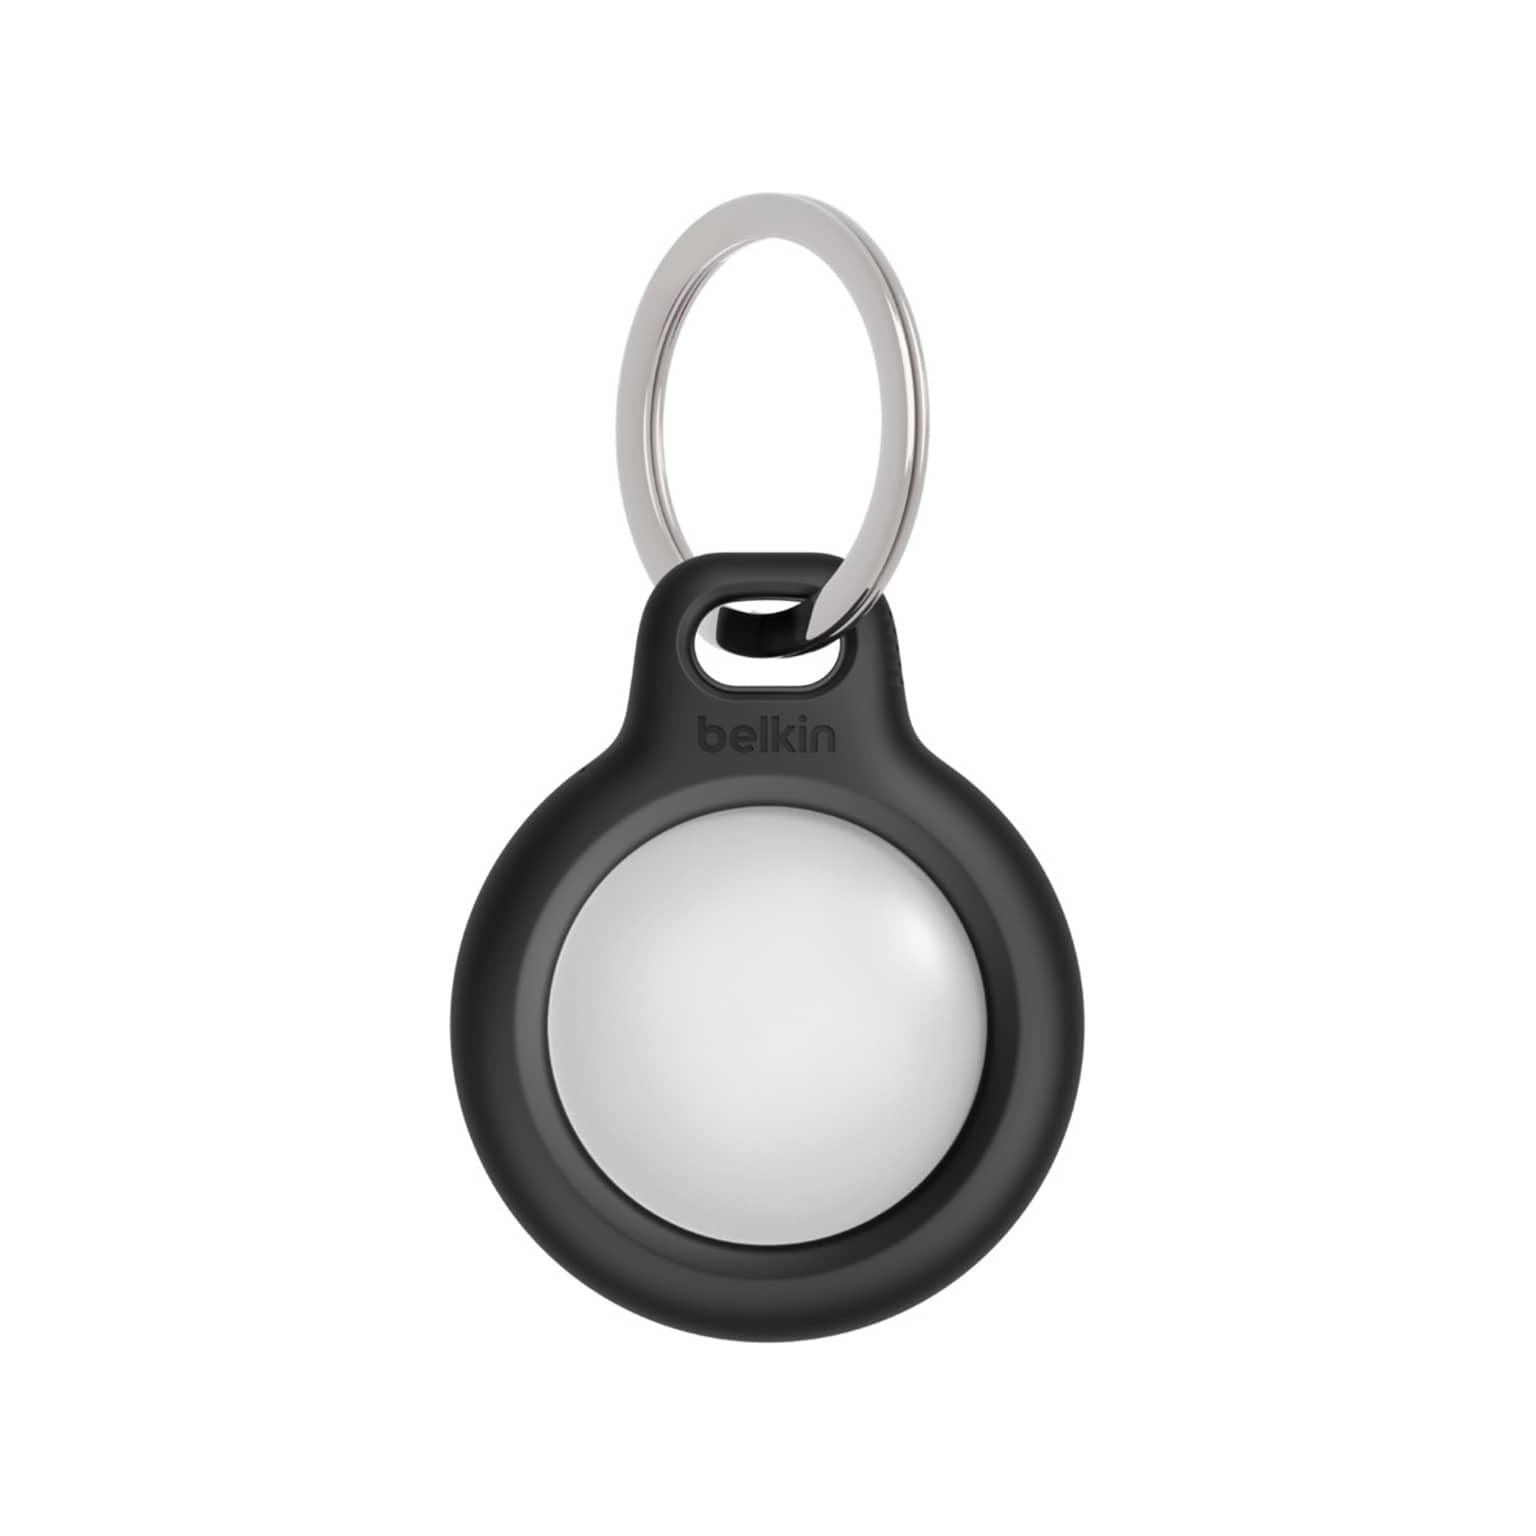 Belkin Secure Holder with Key Ring, Black (F8W973btBLK)